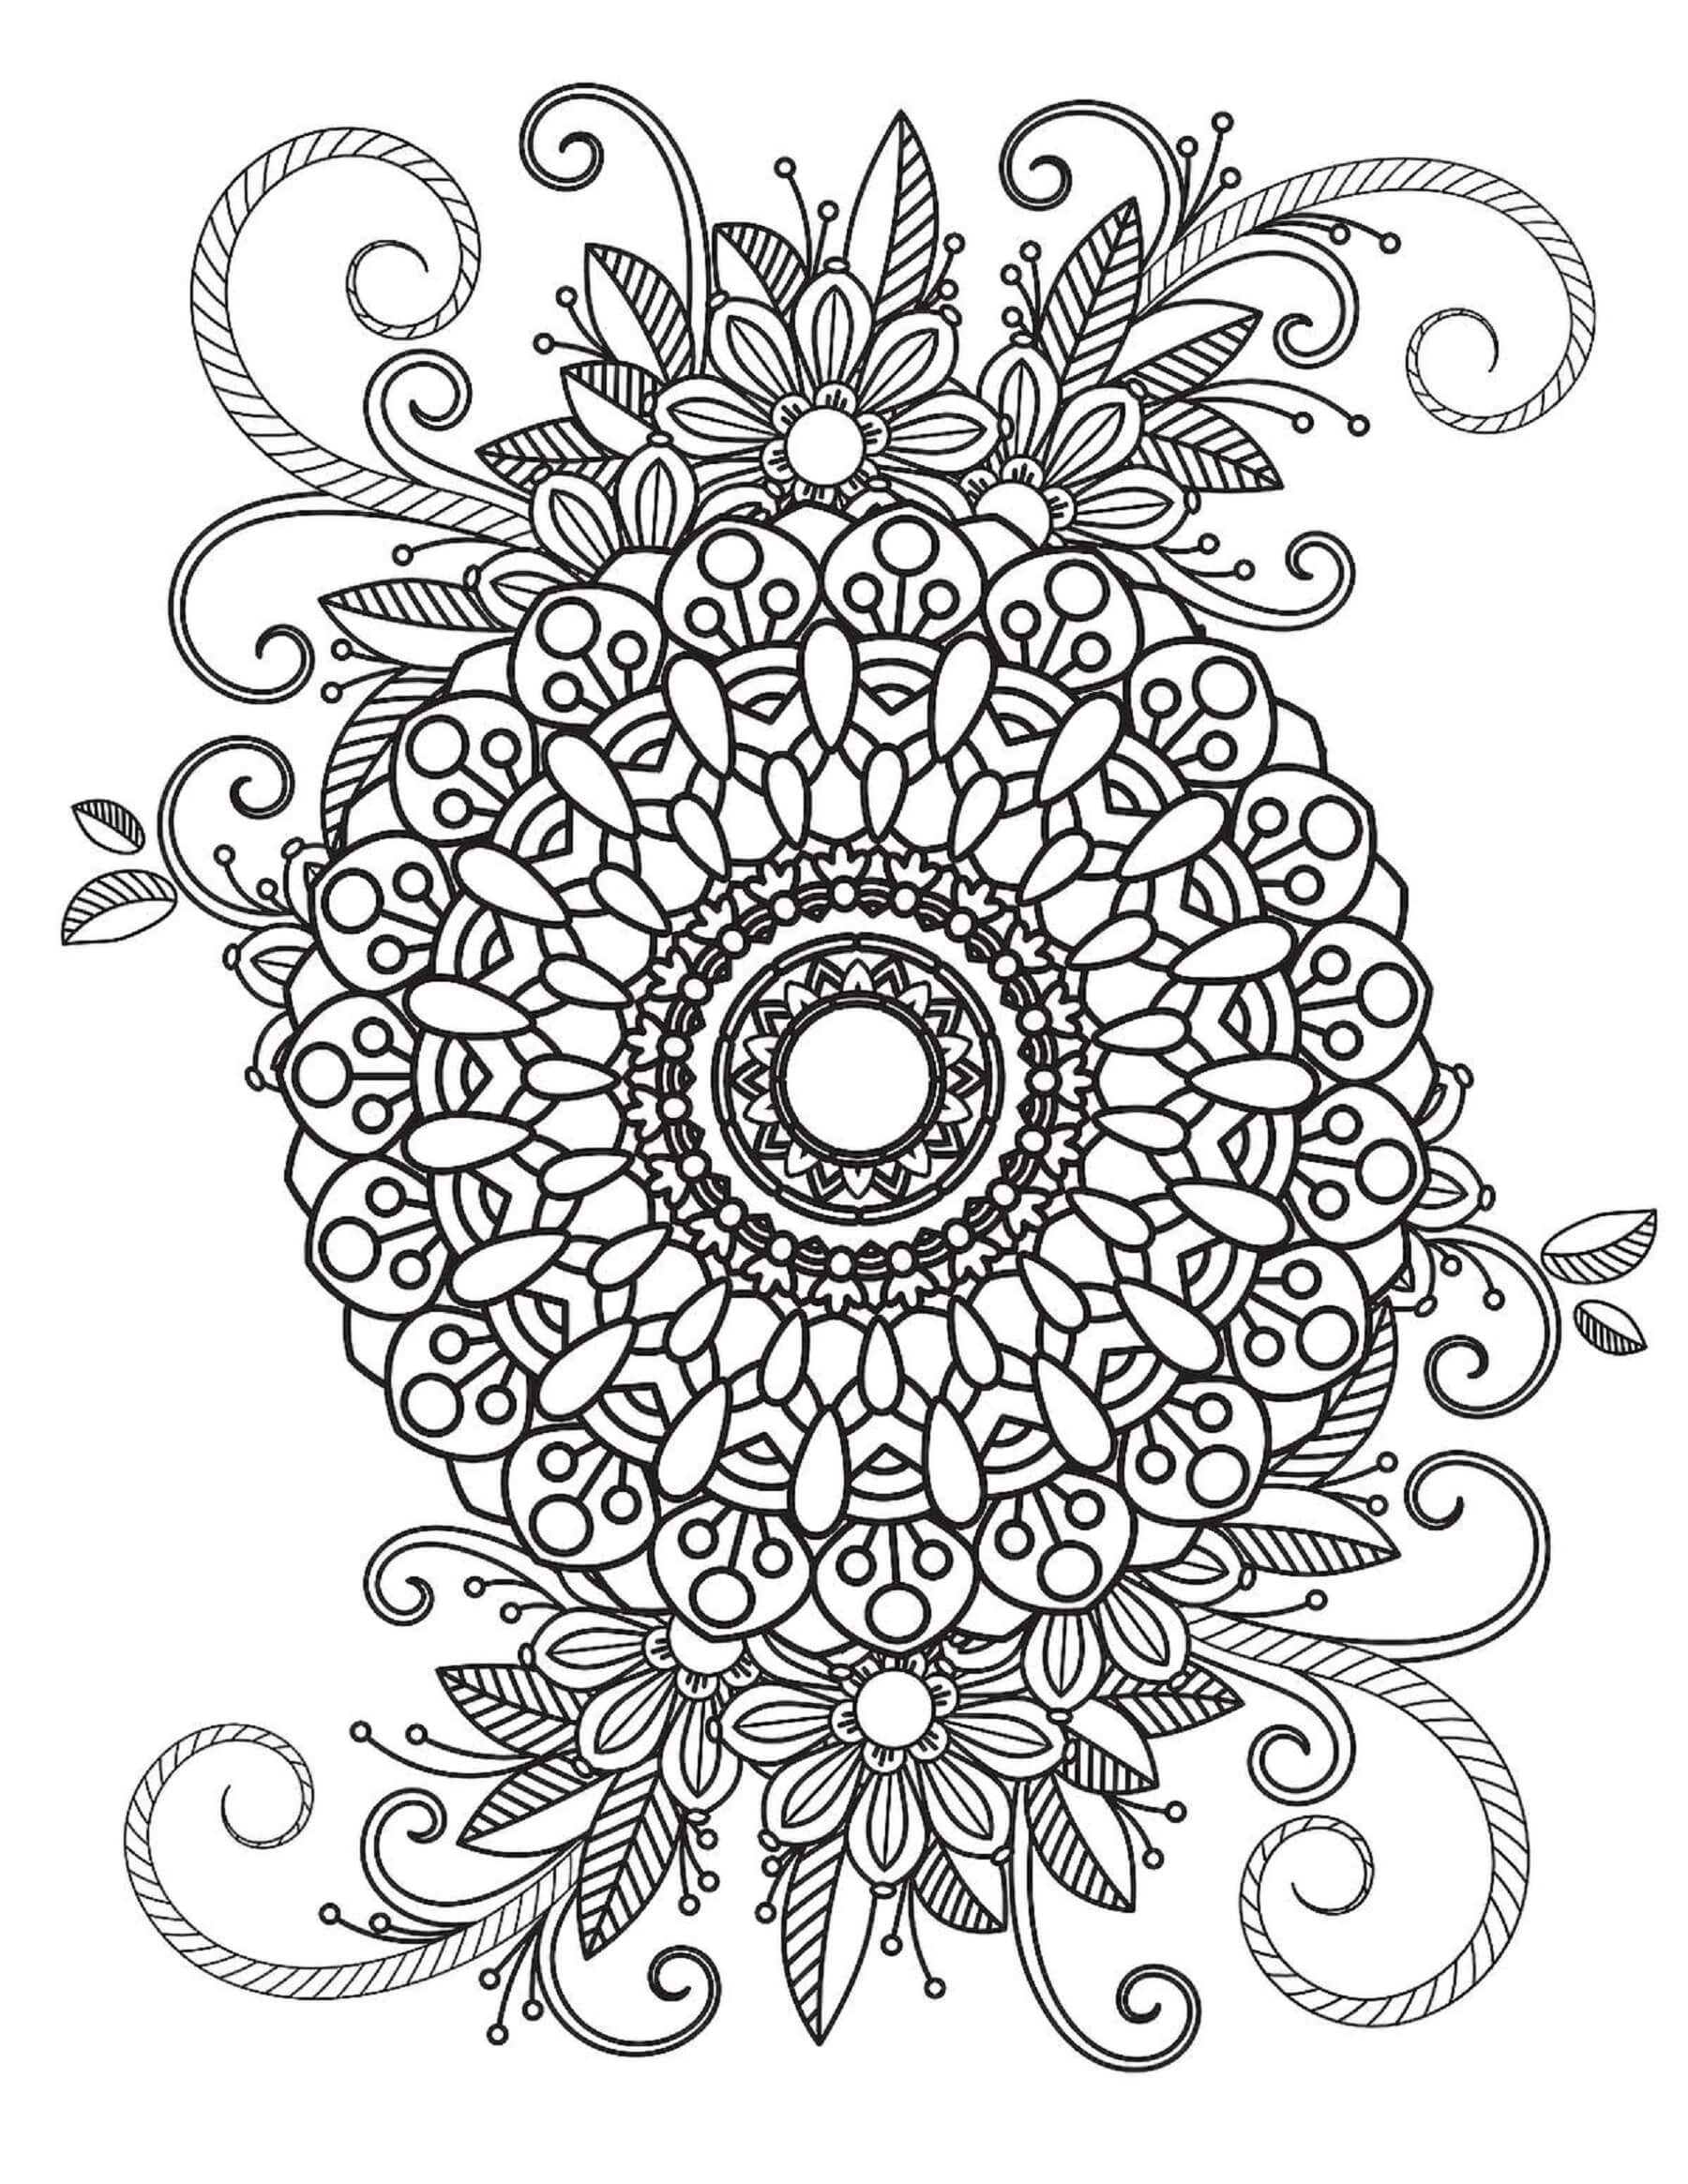 Mandala Winter Coloring Page - Sheet 13 Mandalas